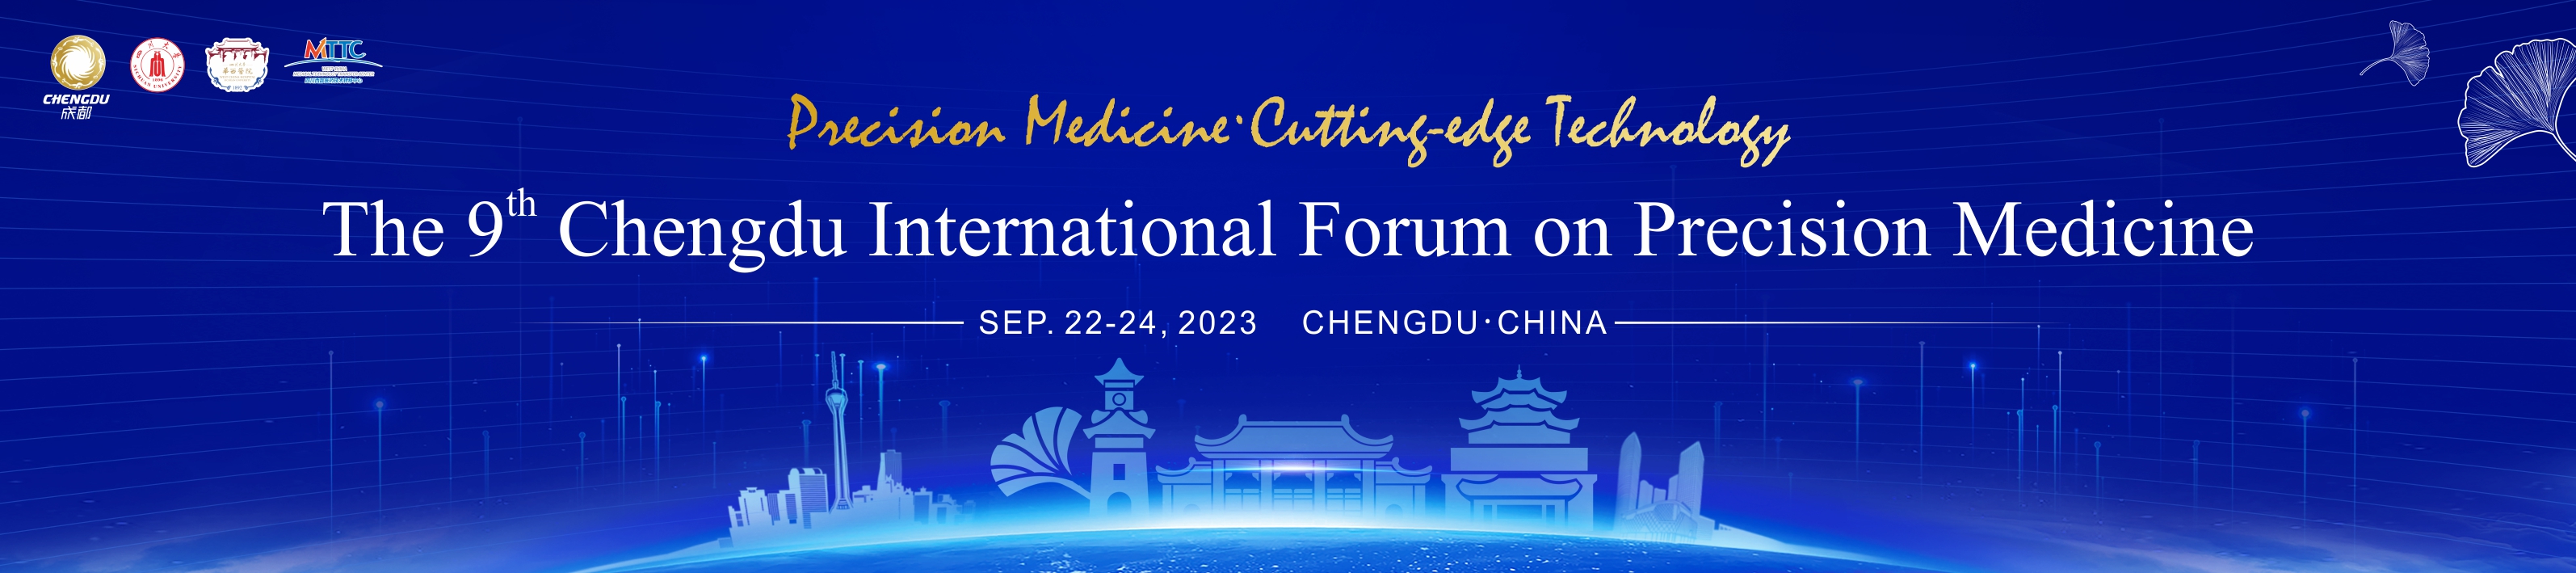 The 9th Chengdu International Academic Forum on Precision Medicine